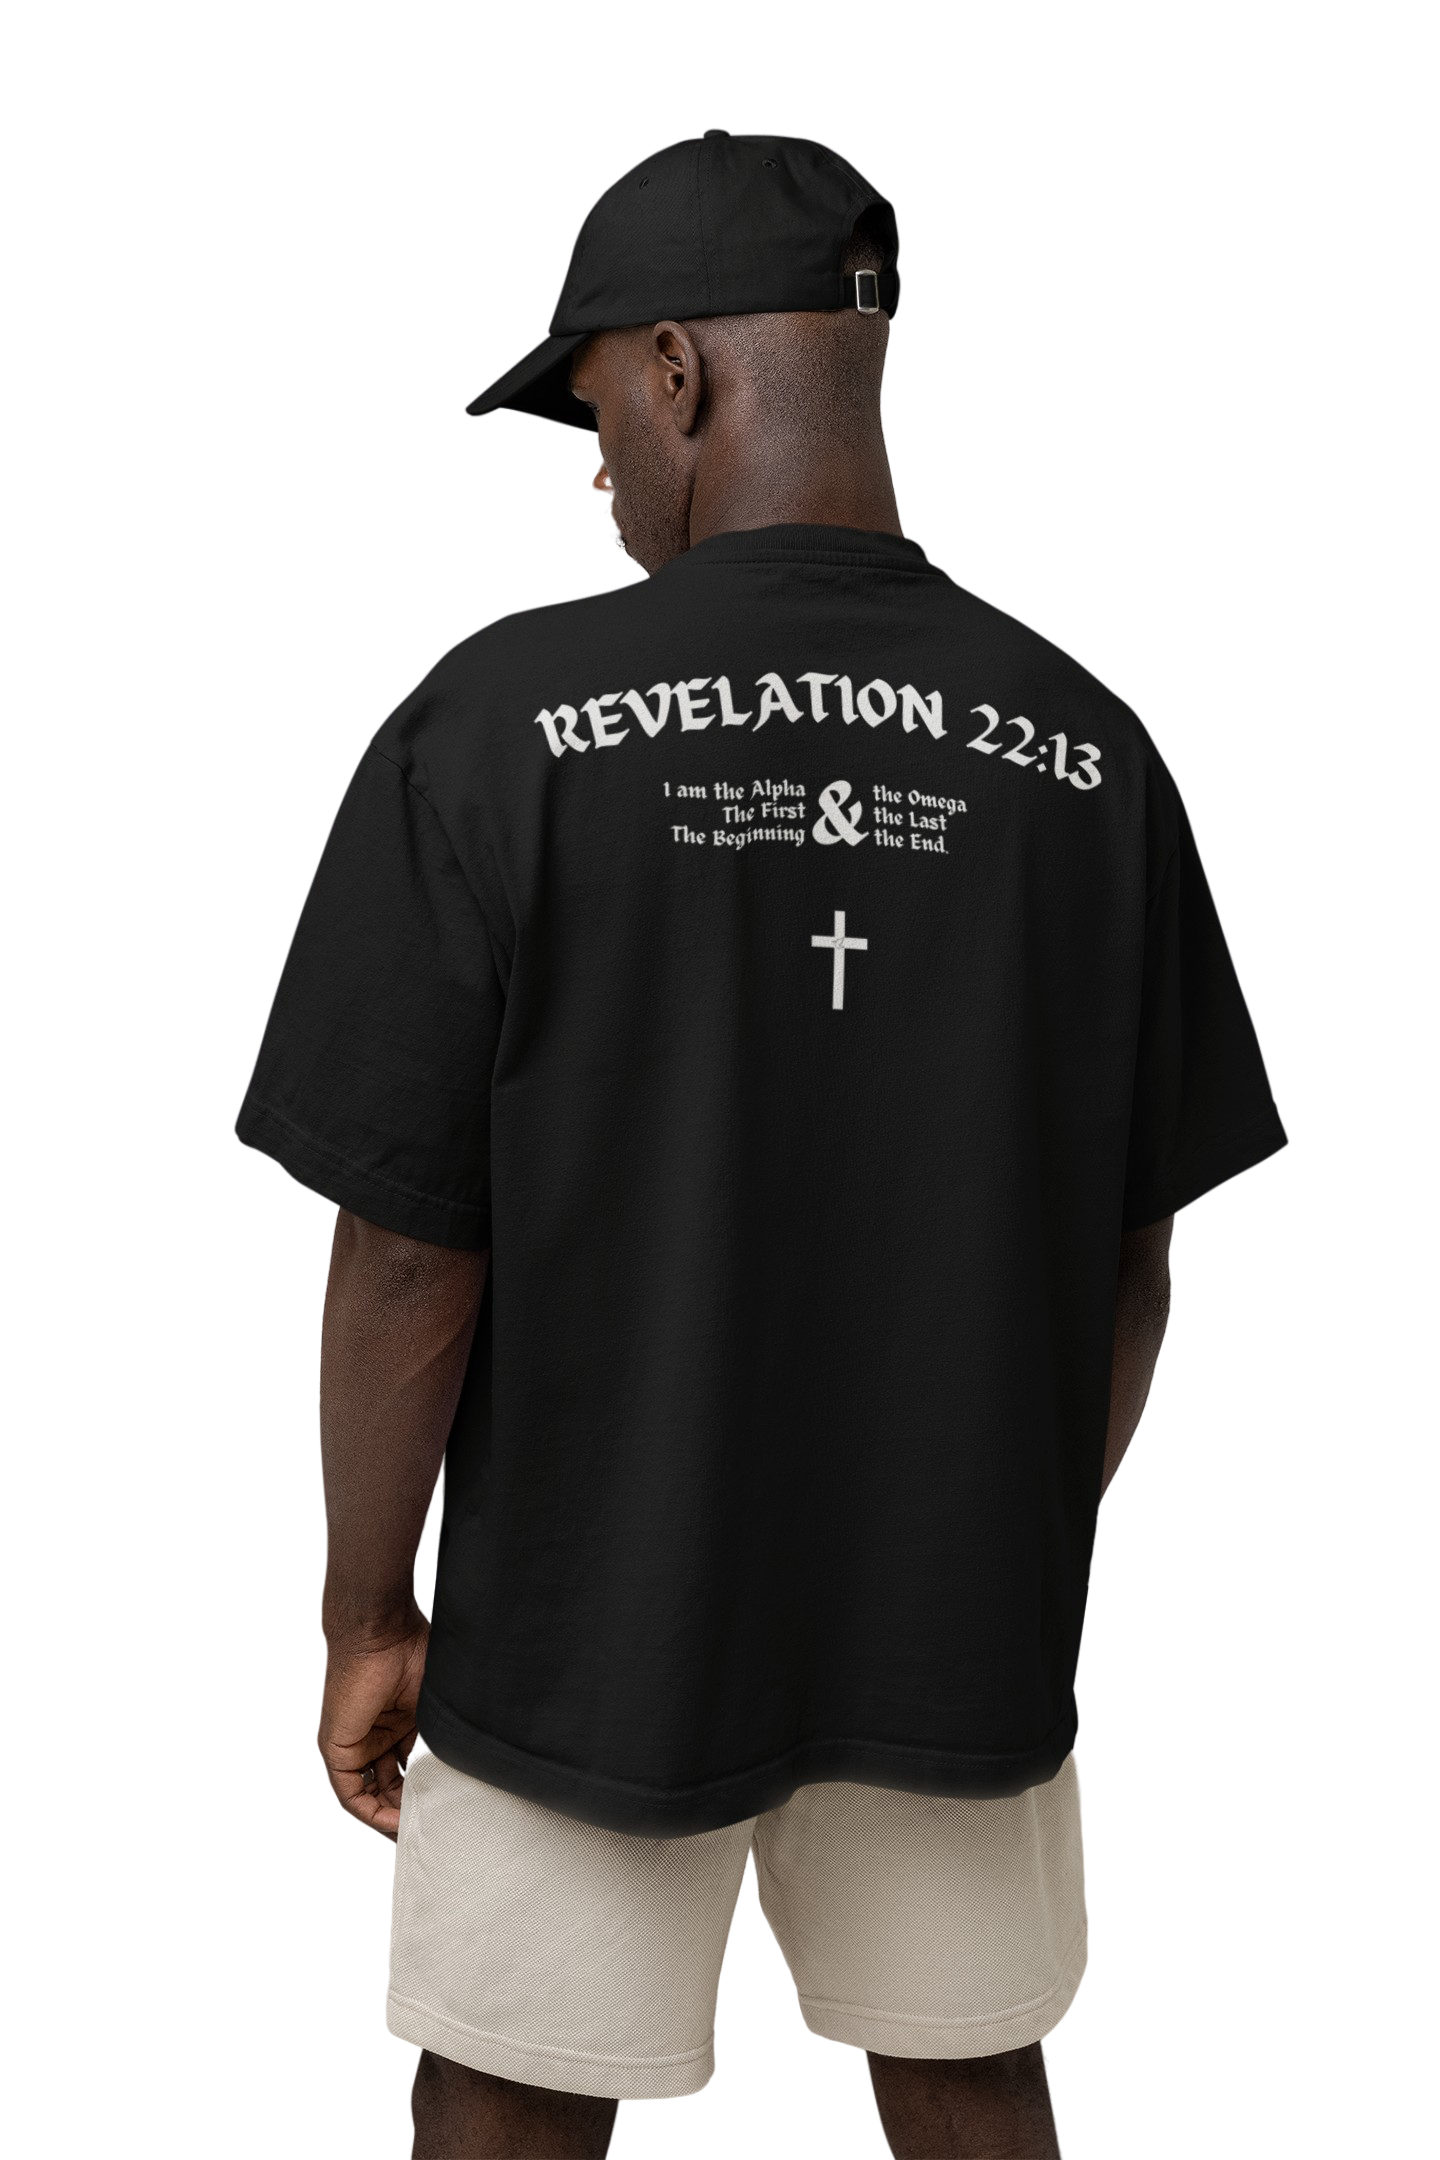 REVELATION 22:13 Tee SALE